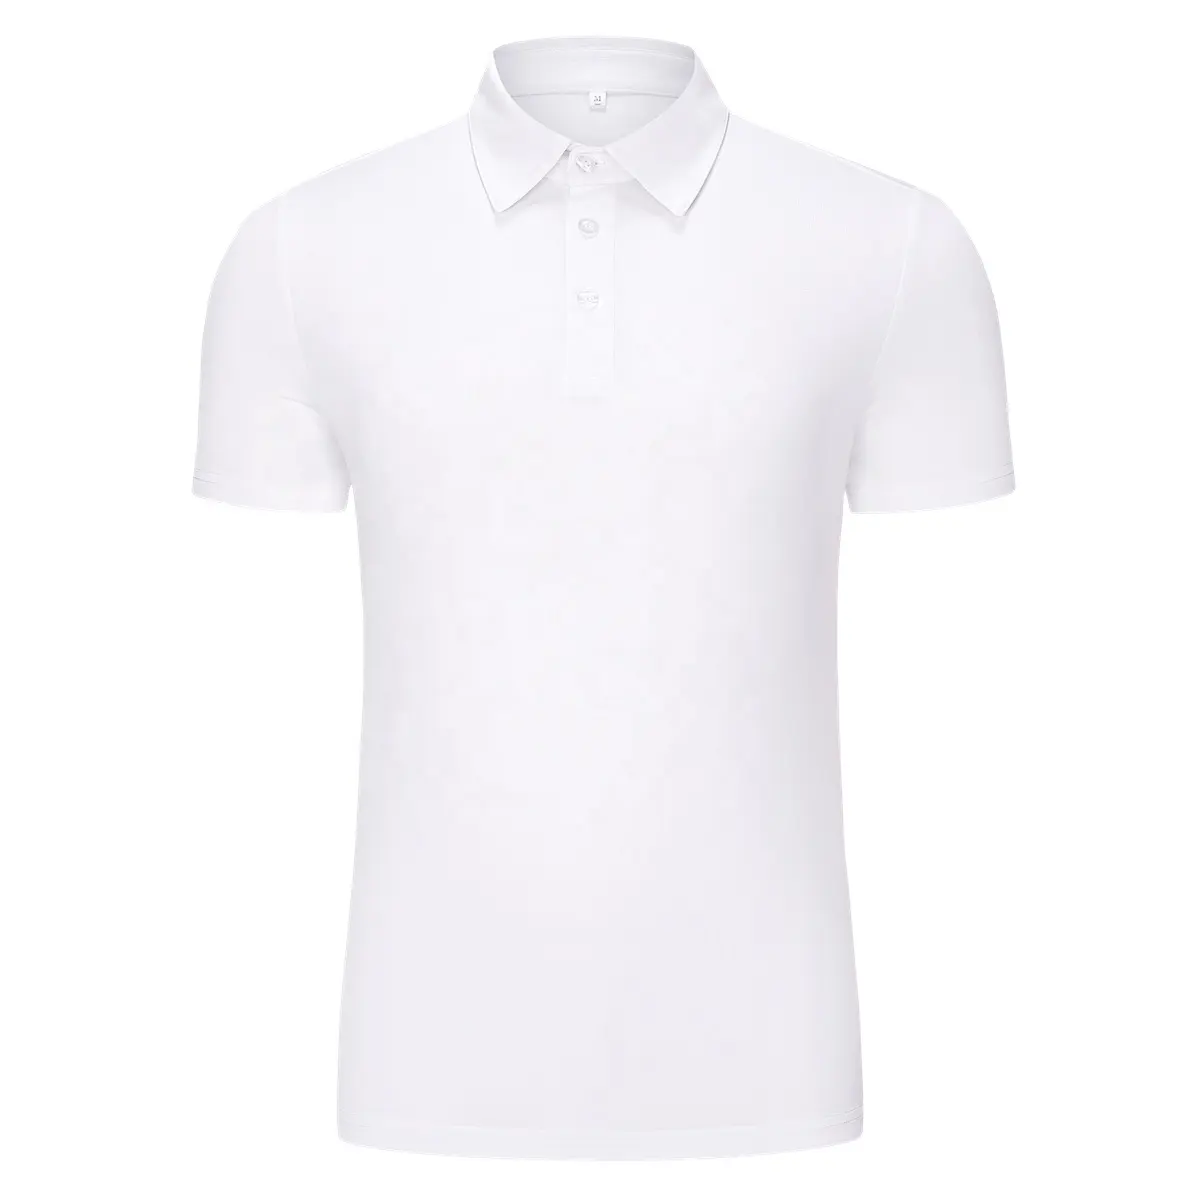 Polo de golf unisexe vierge avec logo personnalisé T en coton respirant pour homme polo pour garçon